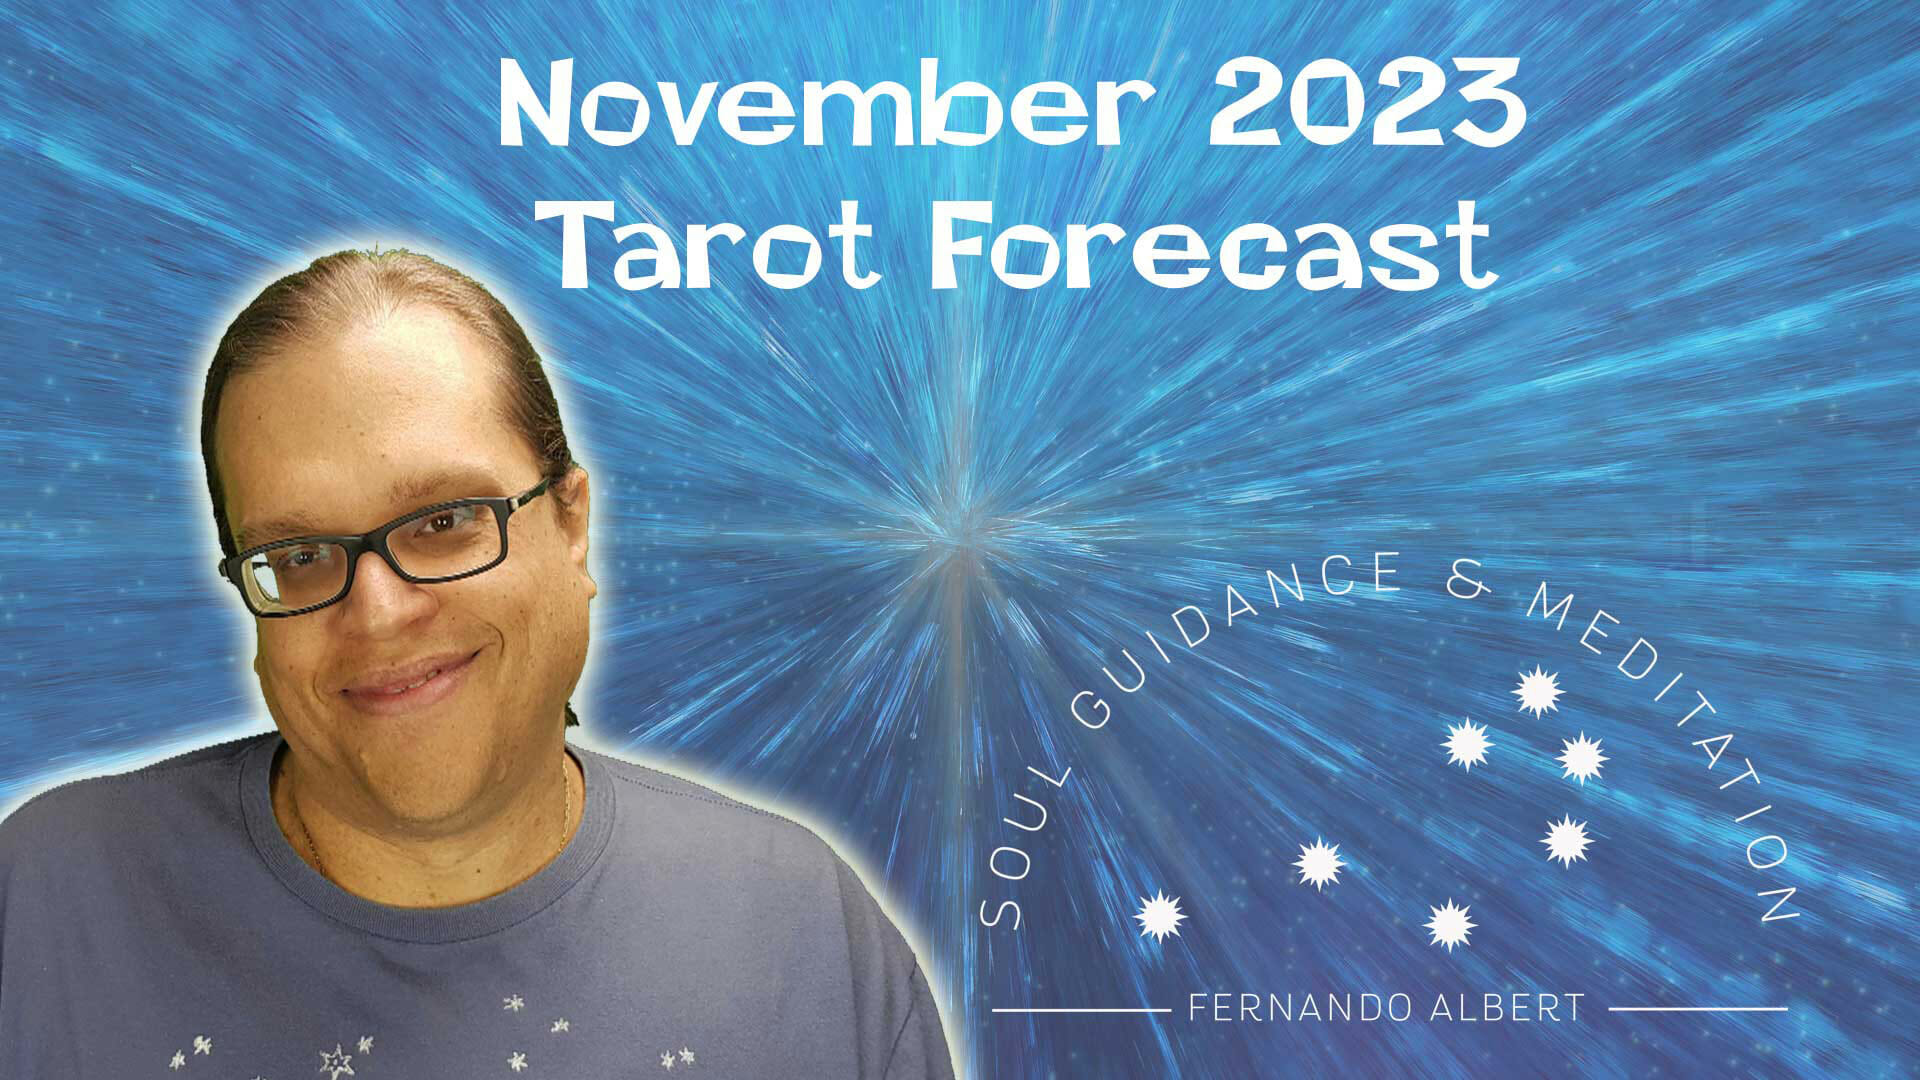 November 2023 Forecast: Your Daily Dose of Light.